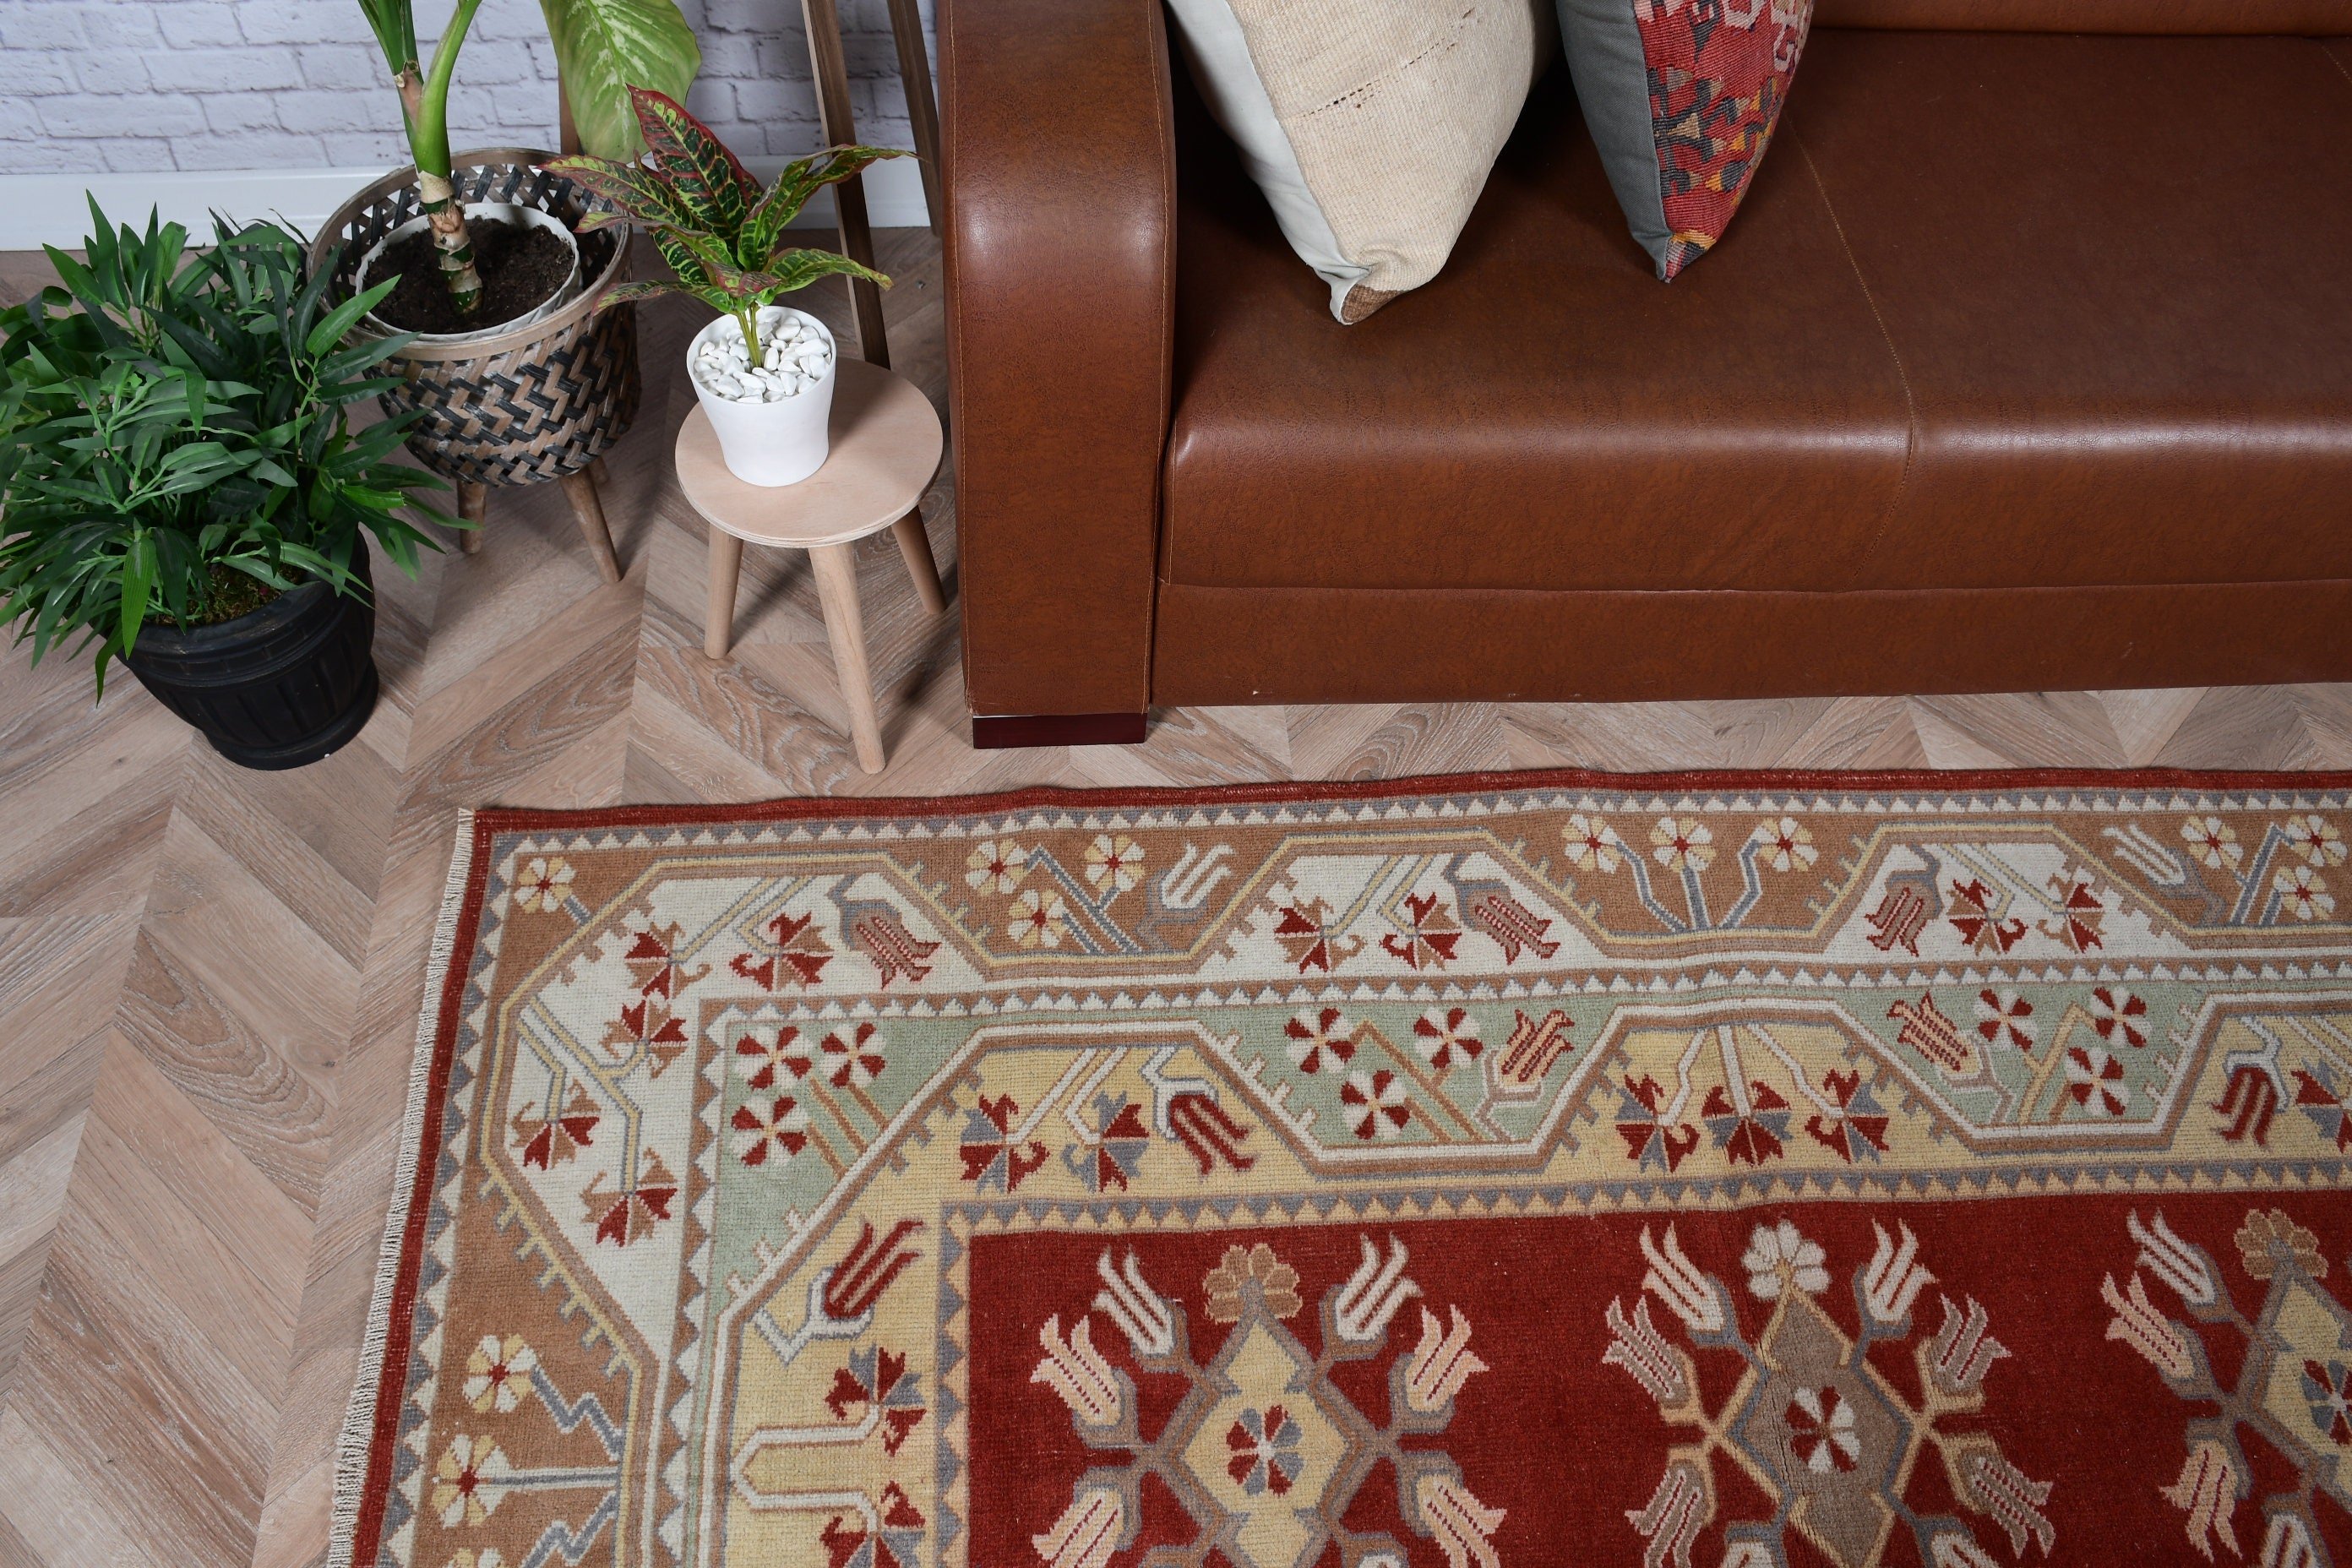 Red Moroccan Rug, Oushak Rug, Living Room Rug, Floor Rug, Antique Rug, Turkish Rugs, 3.9x6.5 ft Area Rug, Vintage Rugs, Rugs for Kitchen